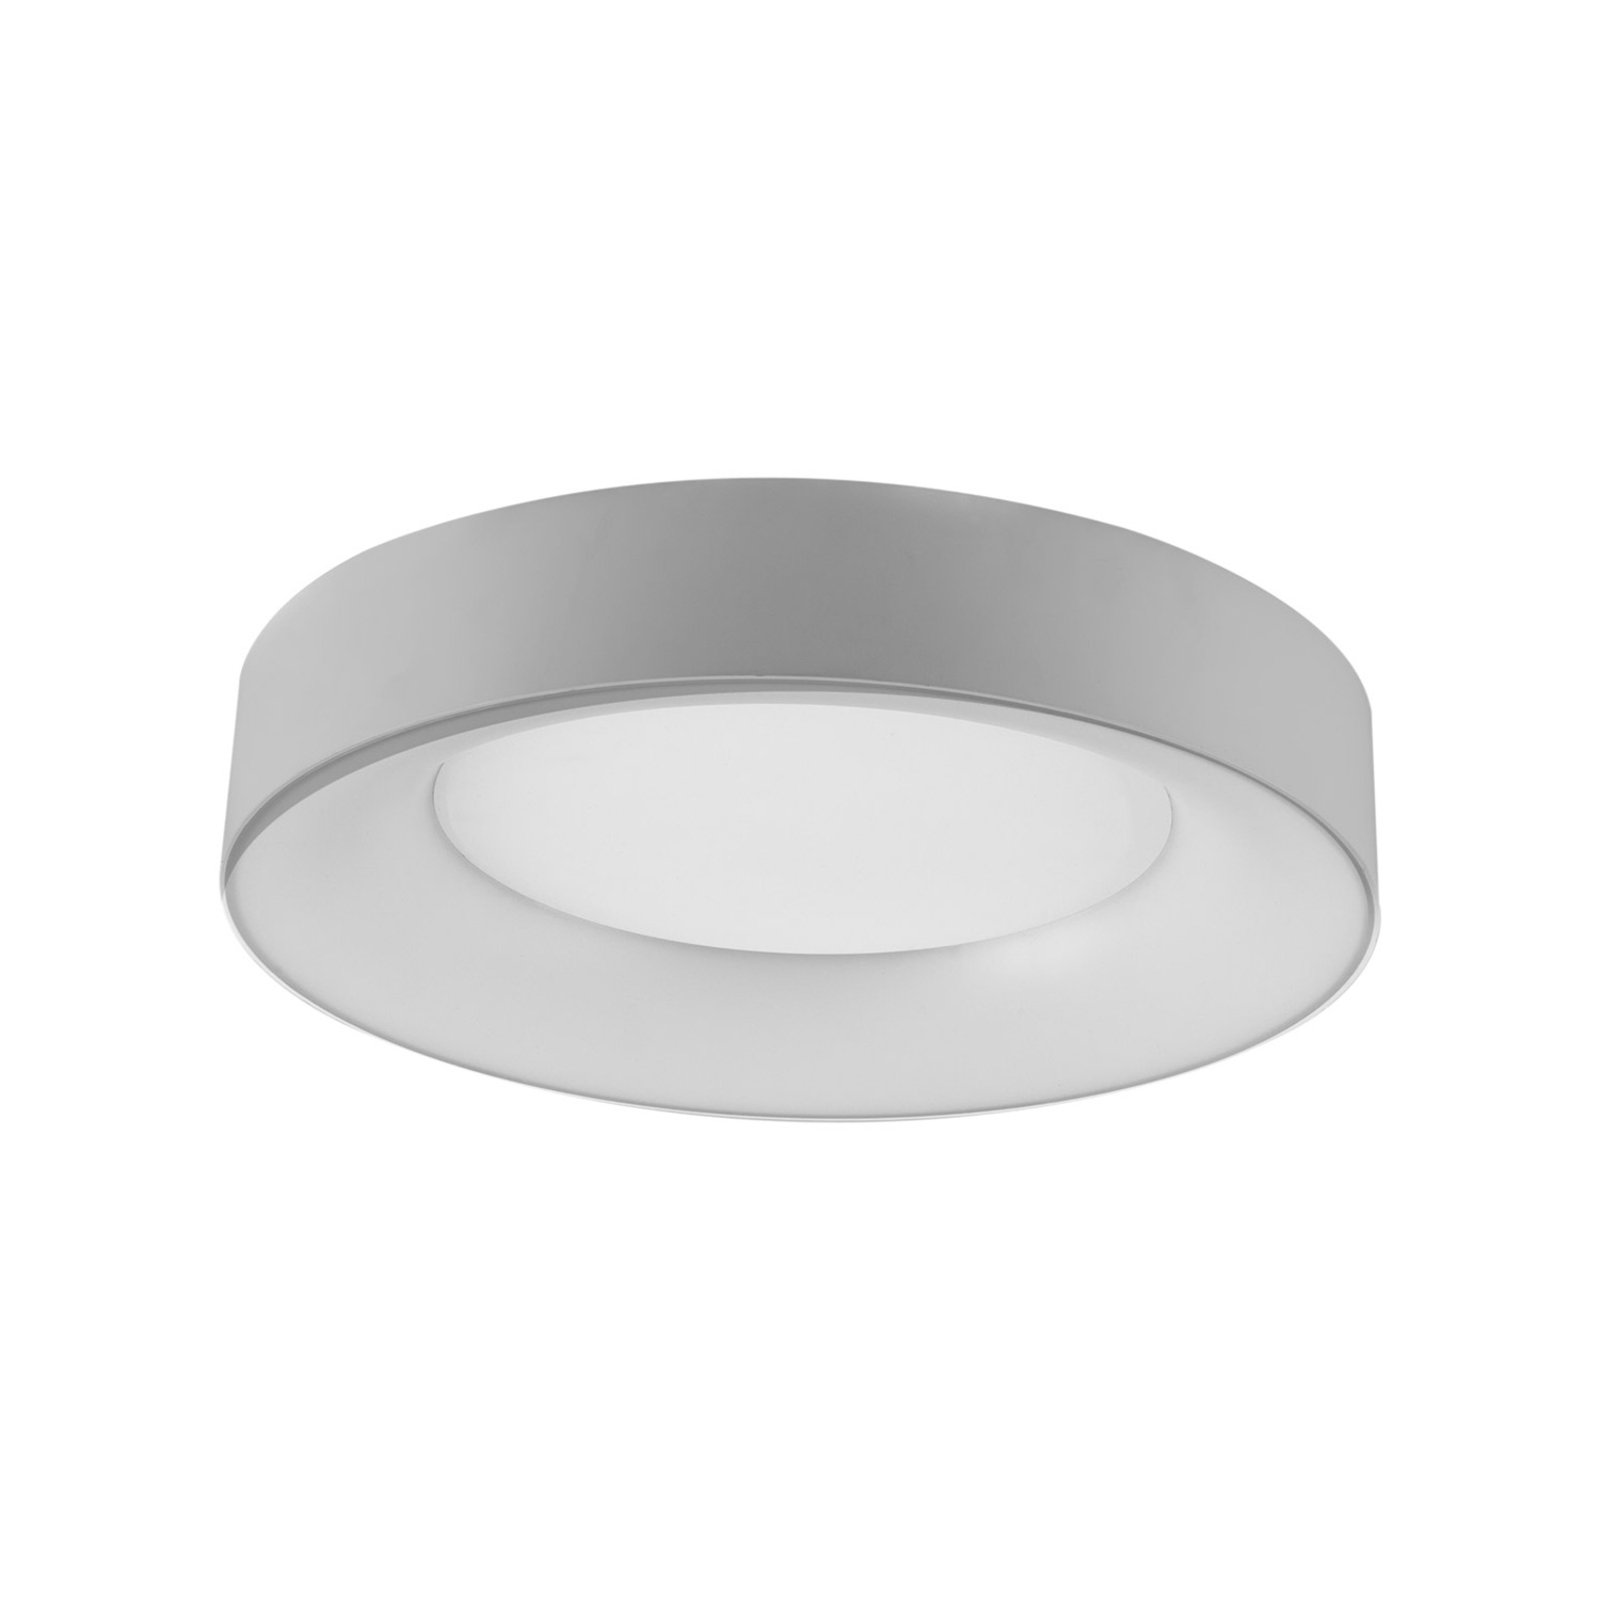 LED ceiling light Sauro, Ø 40 cm, silver